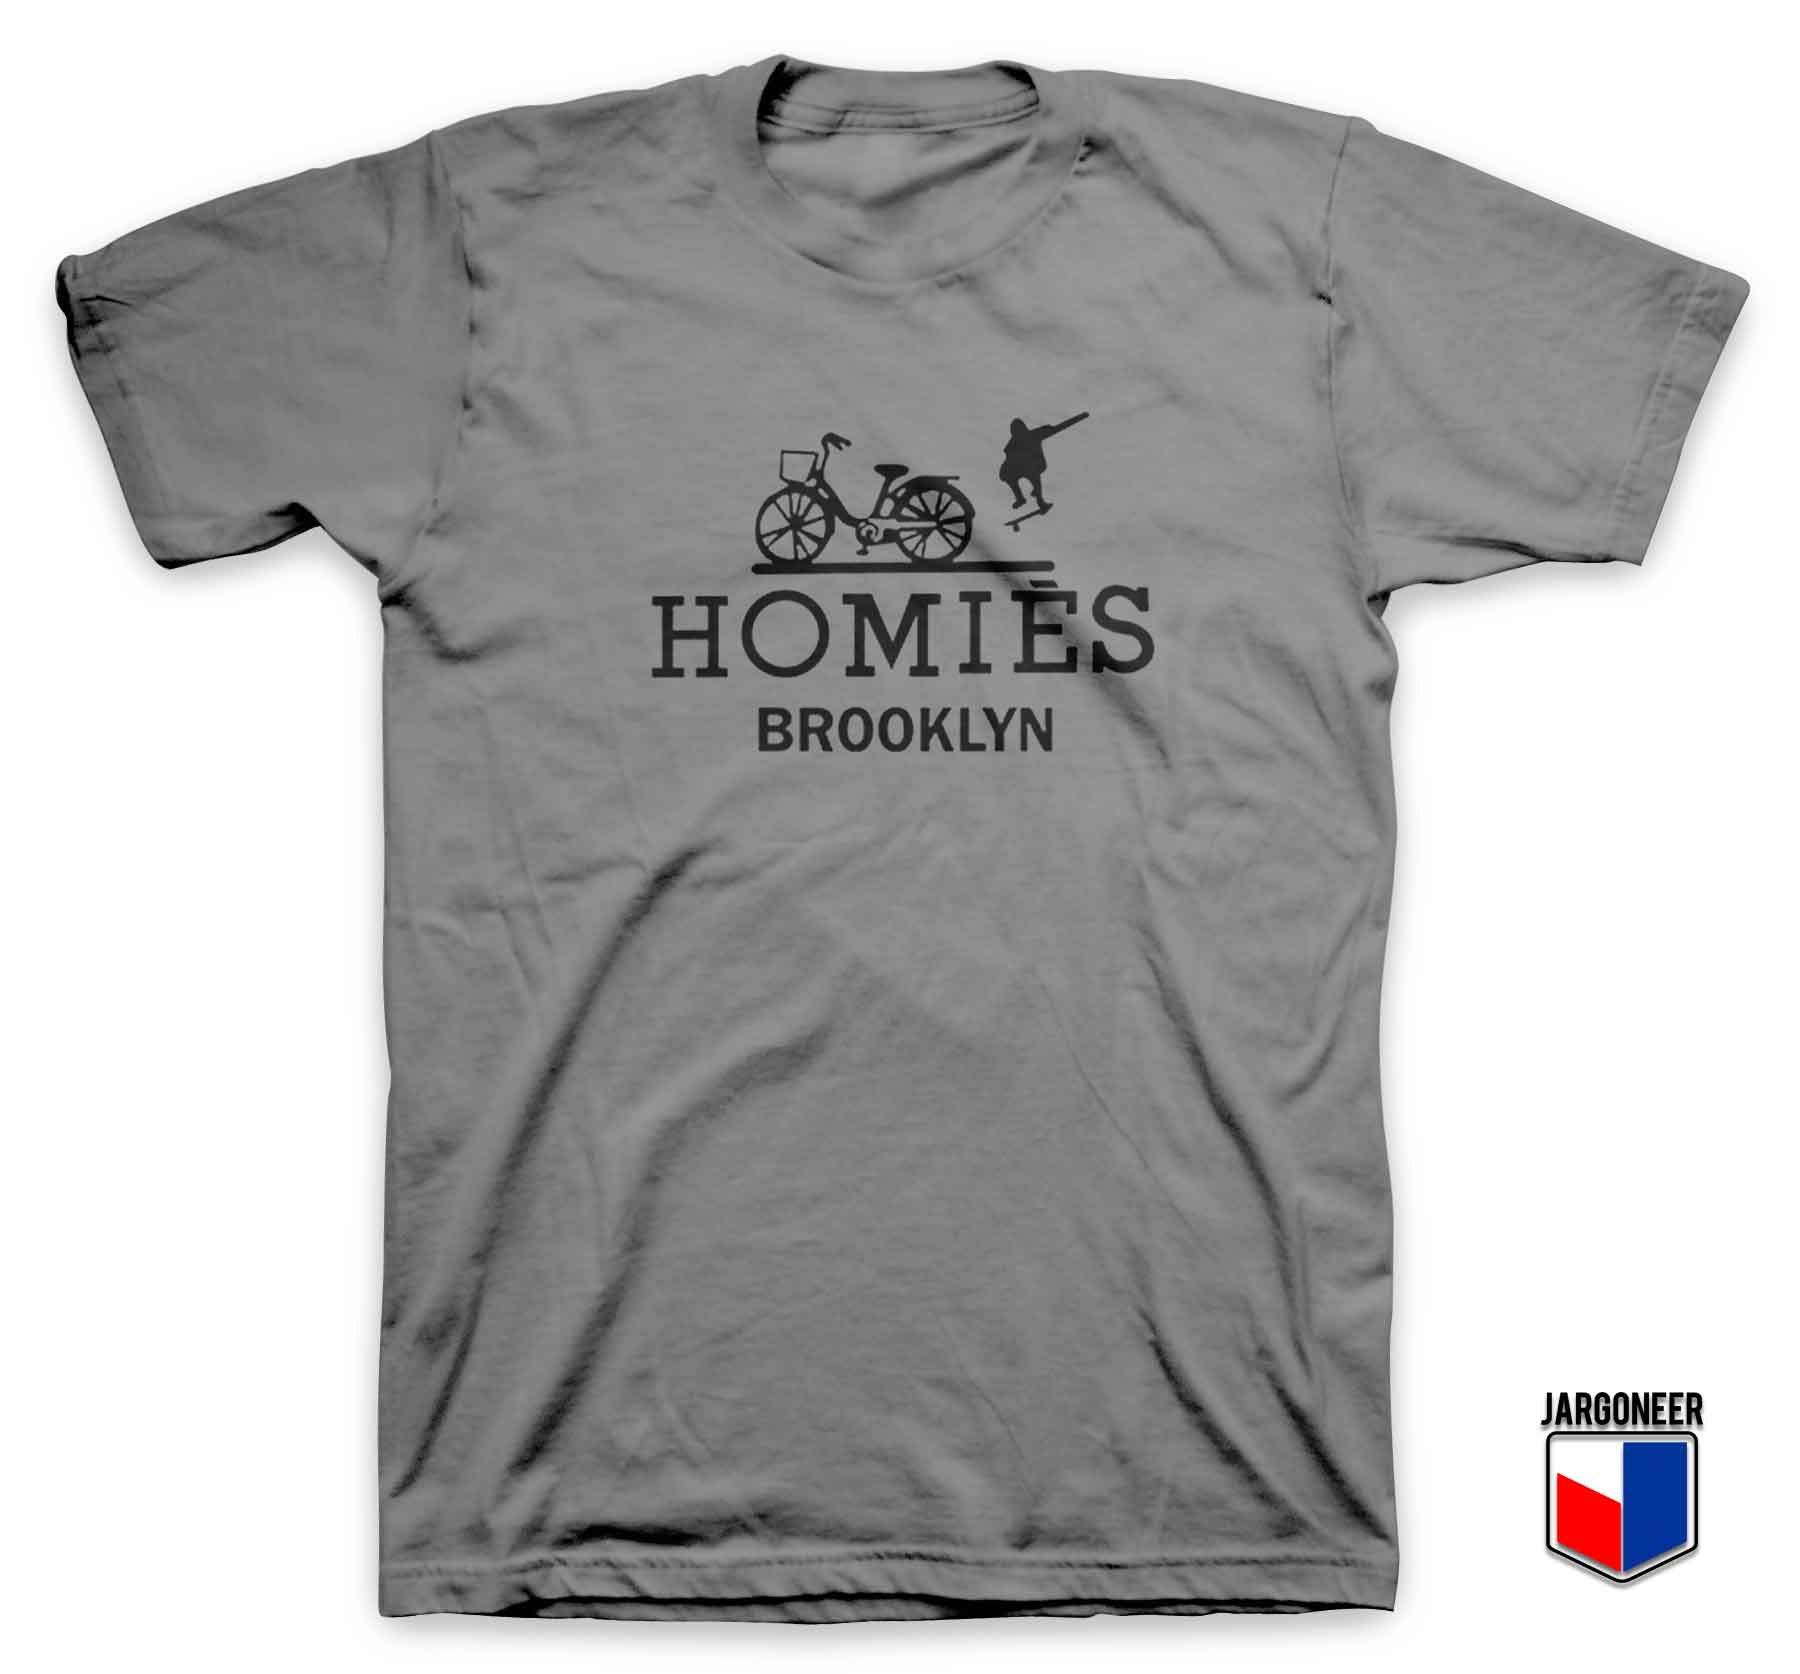 Homies Skate Brooklyn - Shop Unique Graphic Cool Shirt Designs